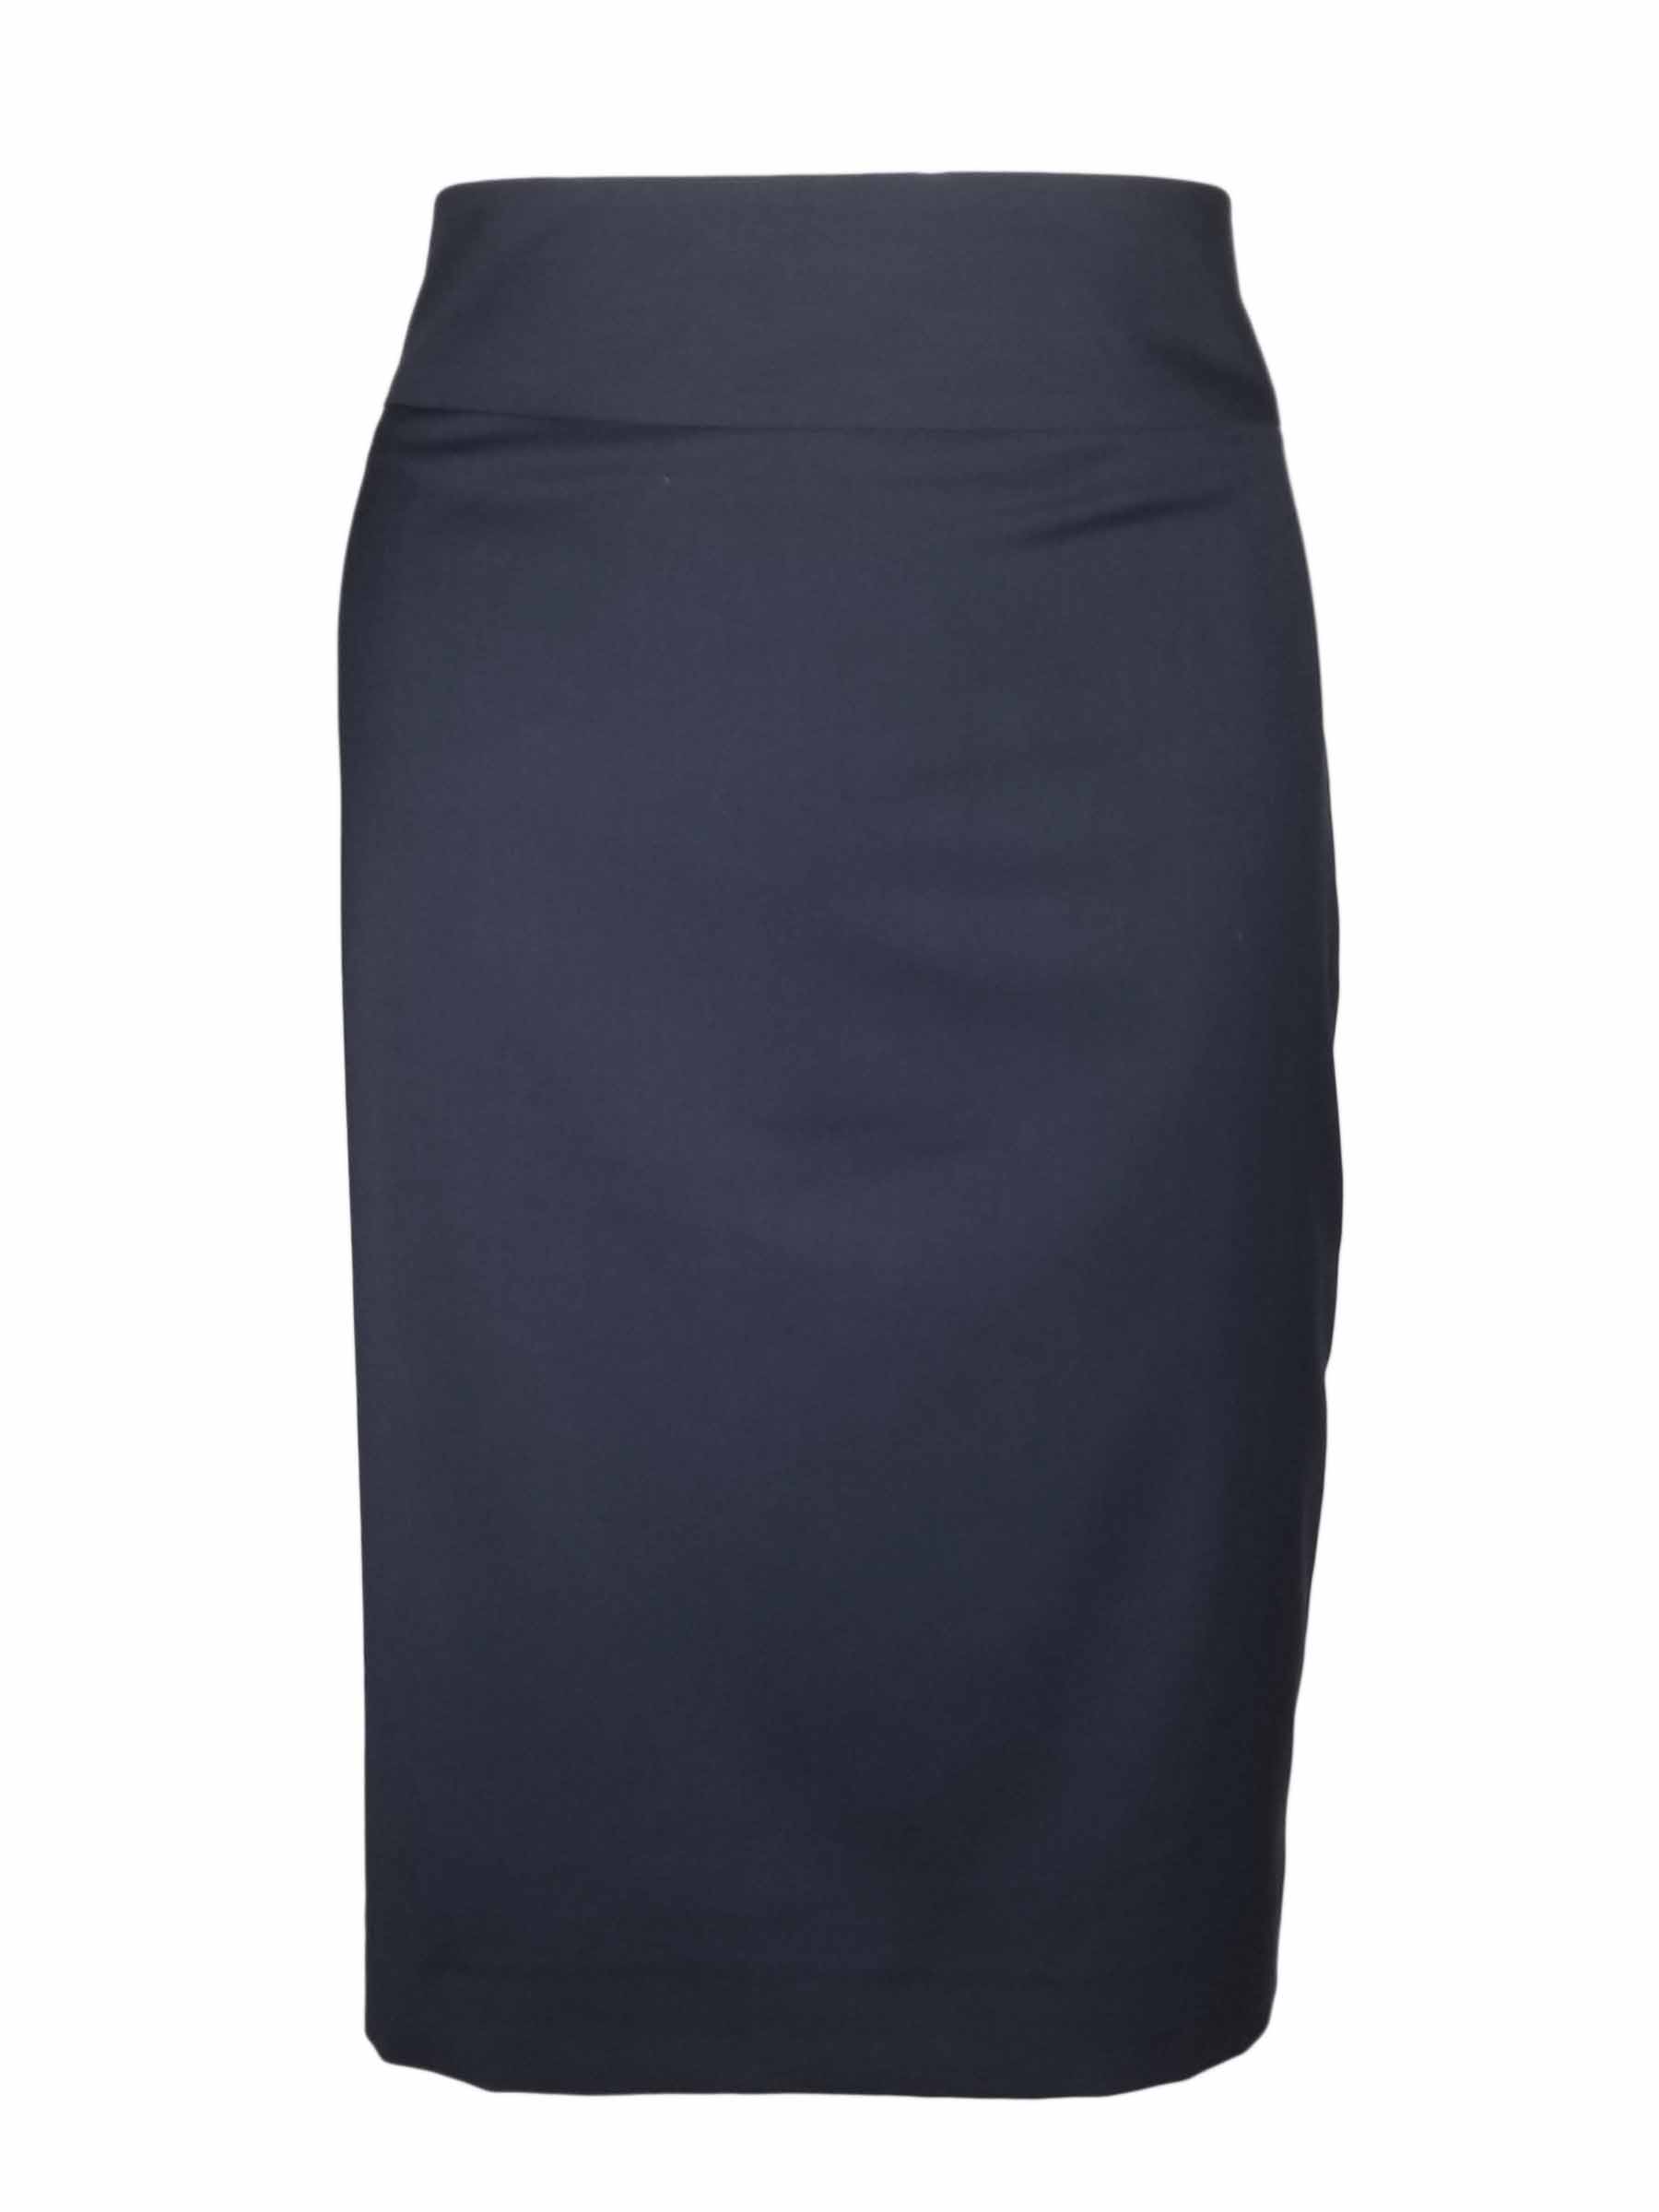 Straight Custom Skirt - Navy Wool Blend - Uniform Edit